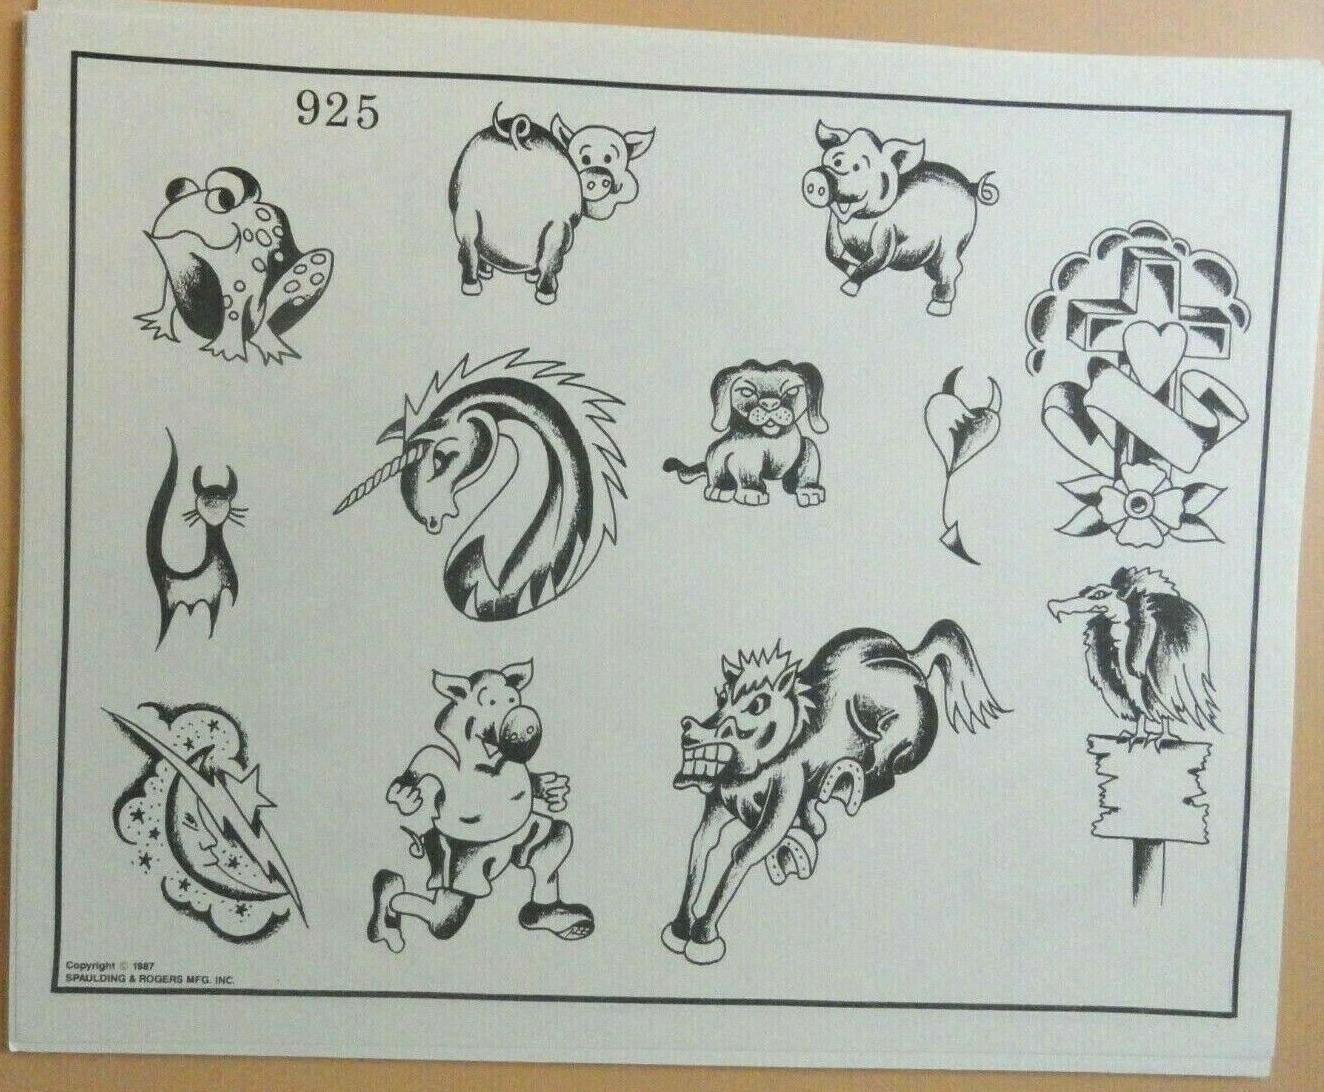 Vintage RARE 1987 Spaulding & Rogers Tattoo Flash Sheet #925 Pigs Vulture Frog